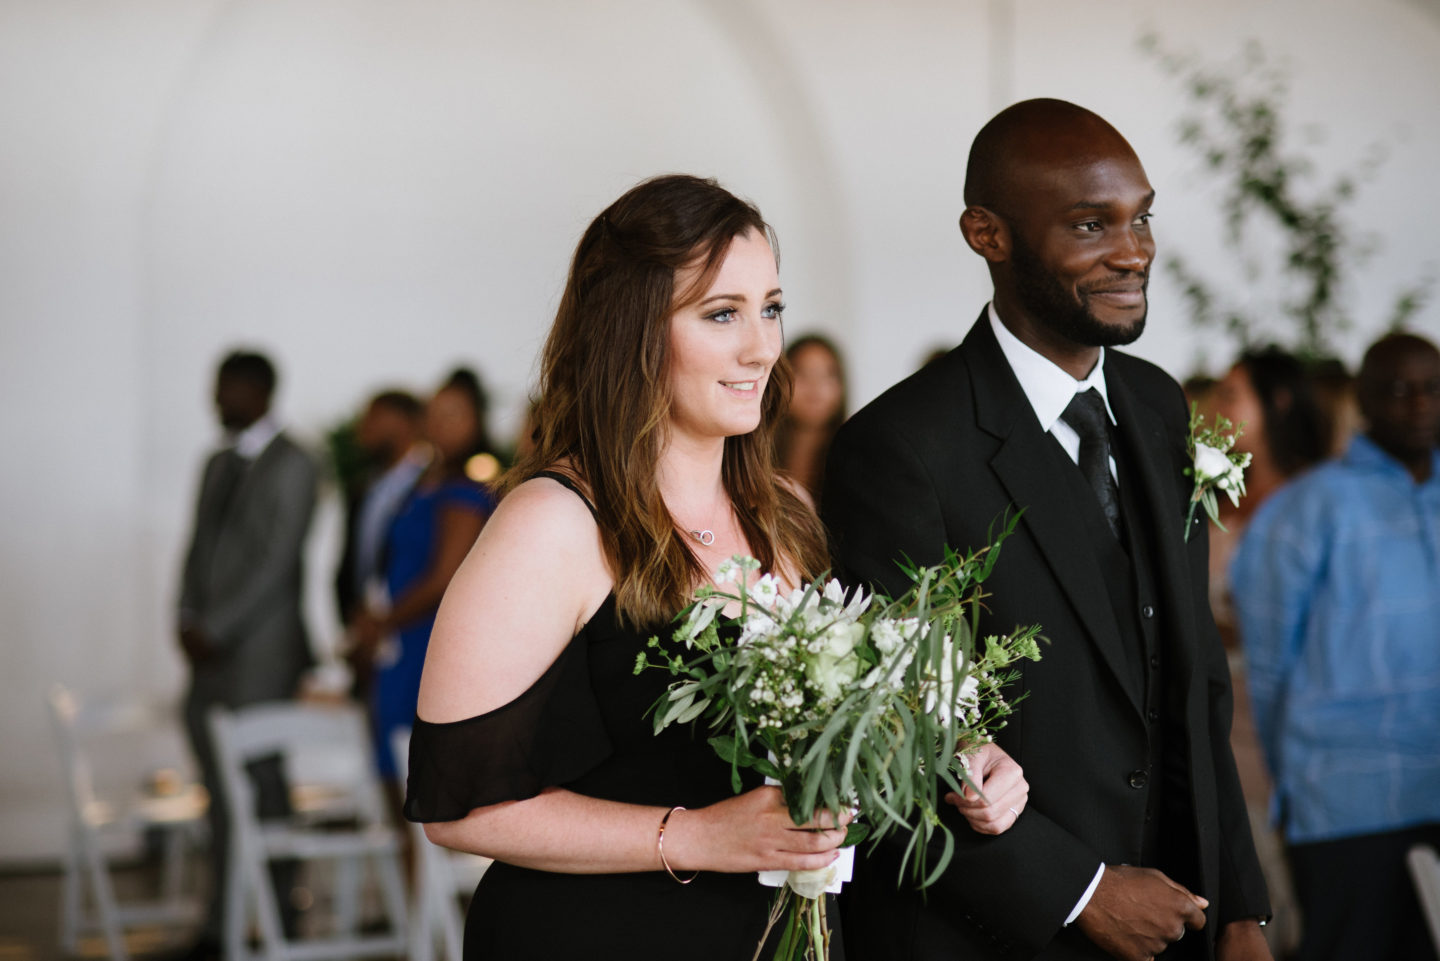 Black bridesmaid dress, black groomsmen suit - A Modern Industrial Wedding Ceremony at Trinity Buoy Wharf